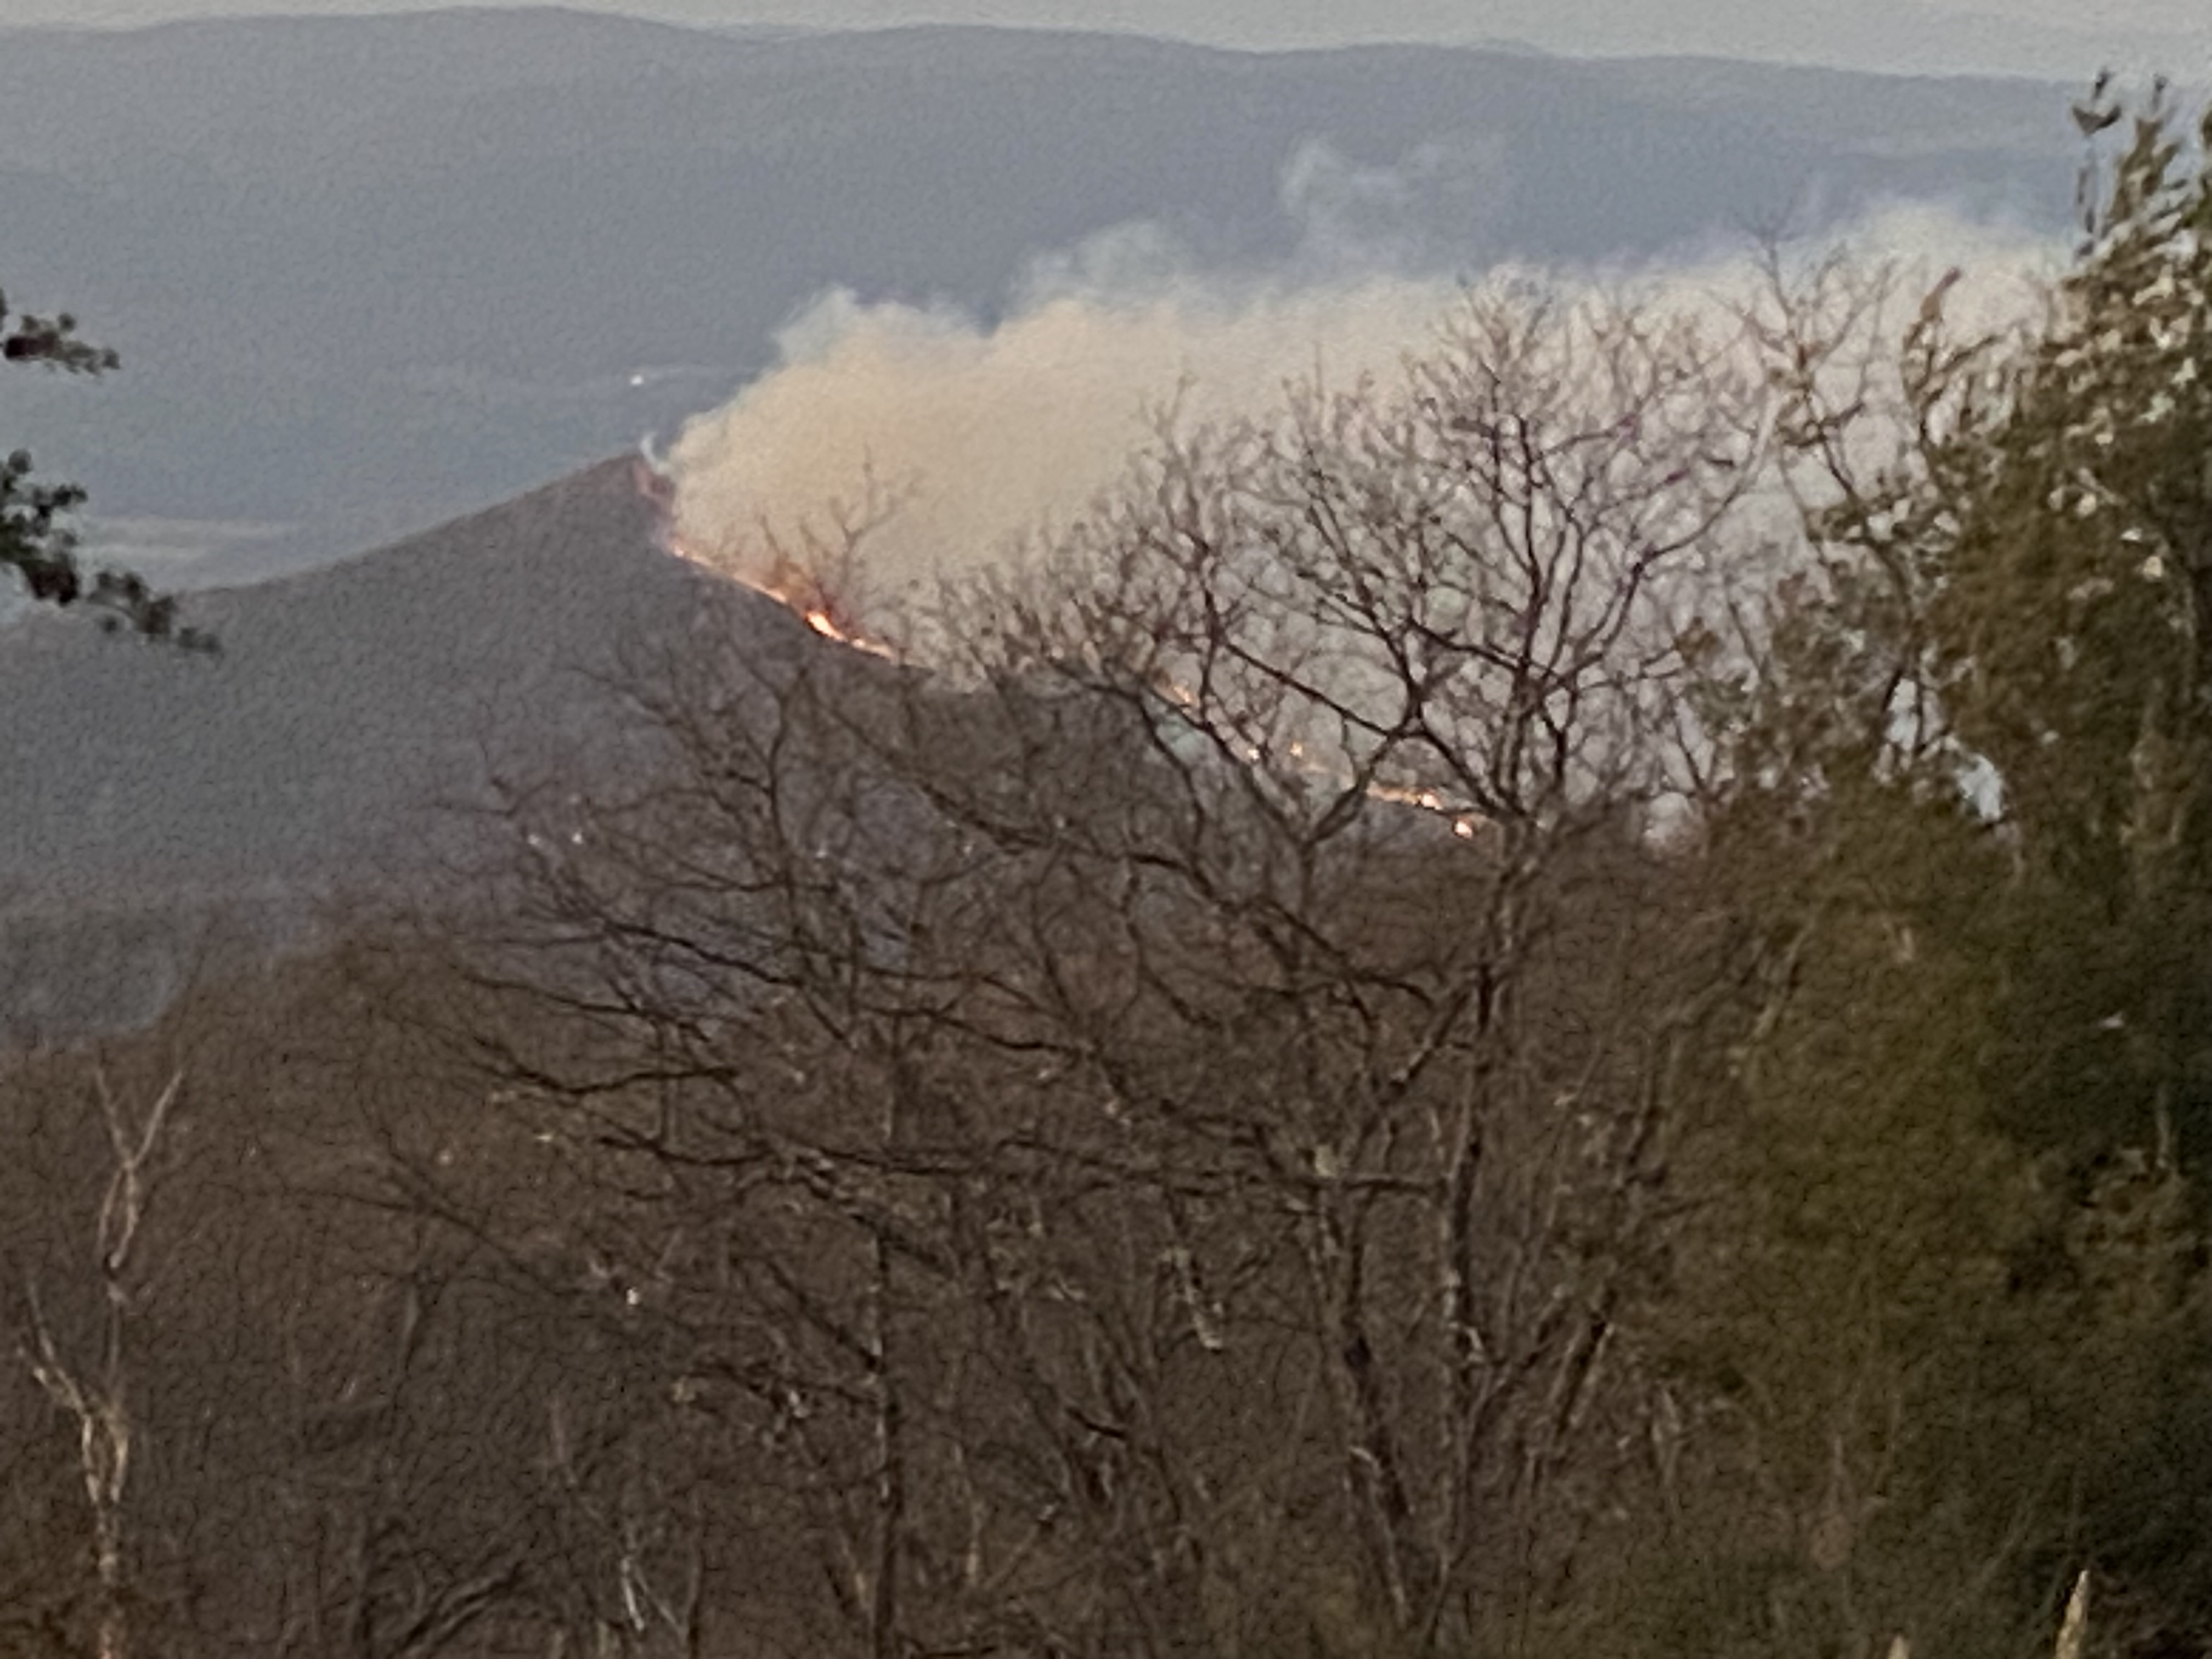 

						Heavener Ridge Fire Early Morning Smoke -GWJNF J. Herring
			